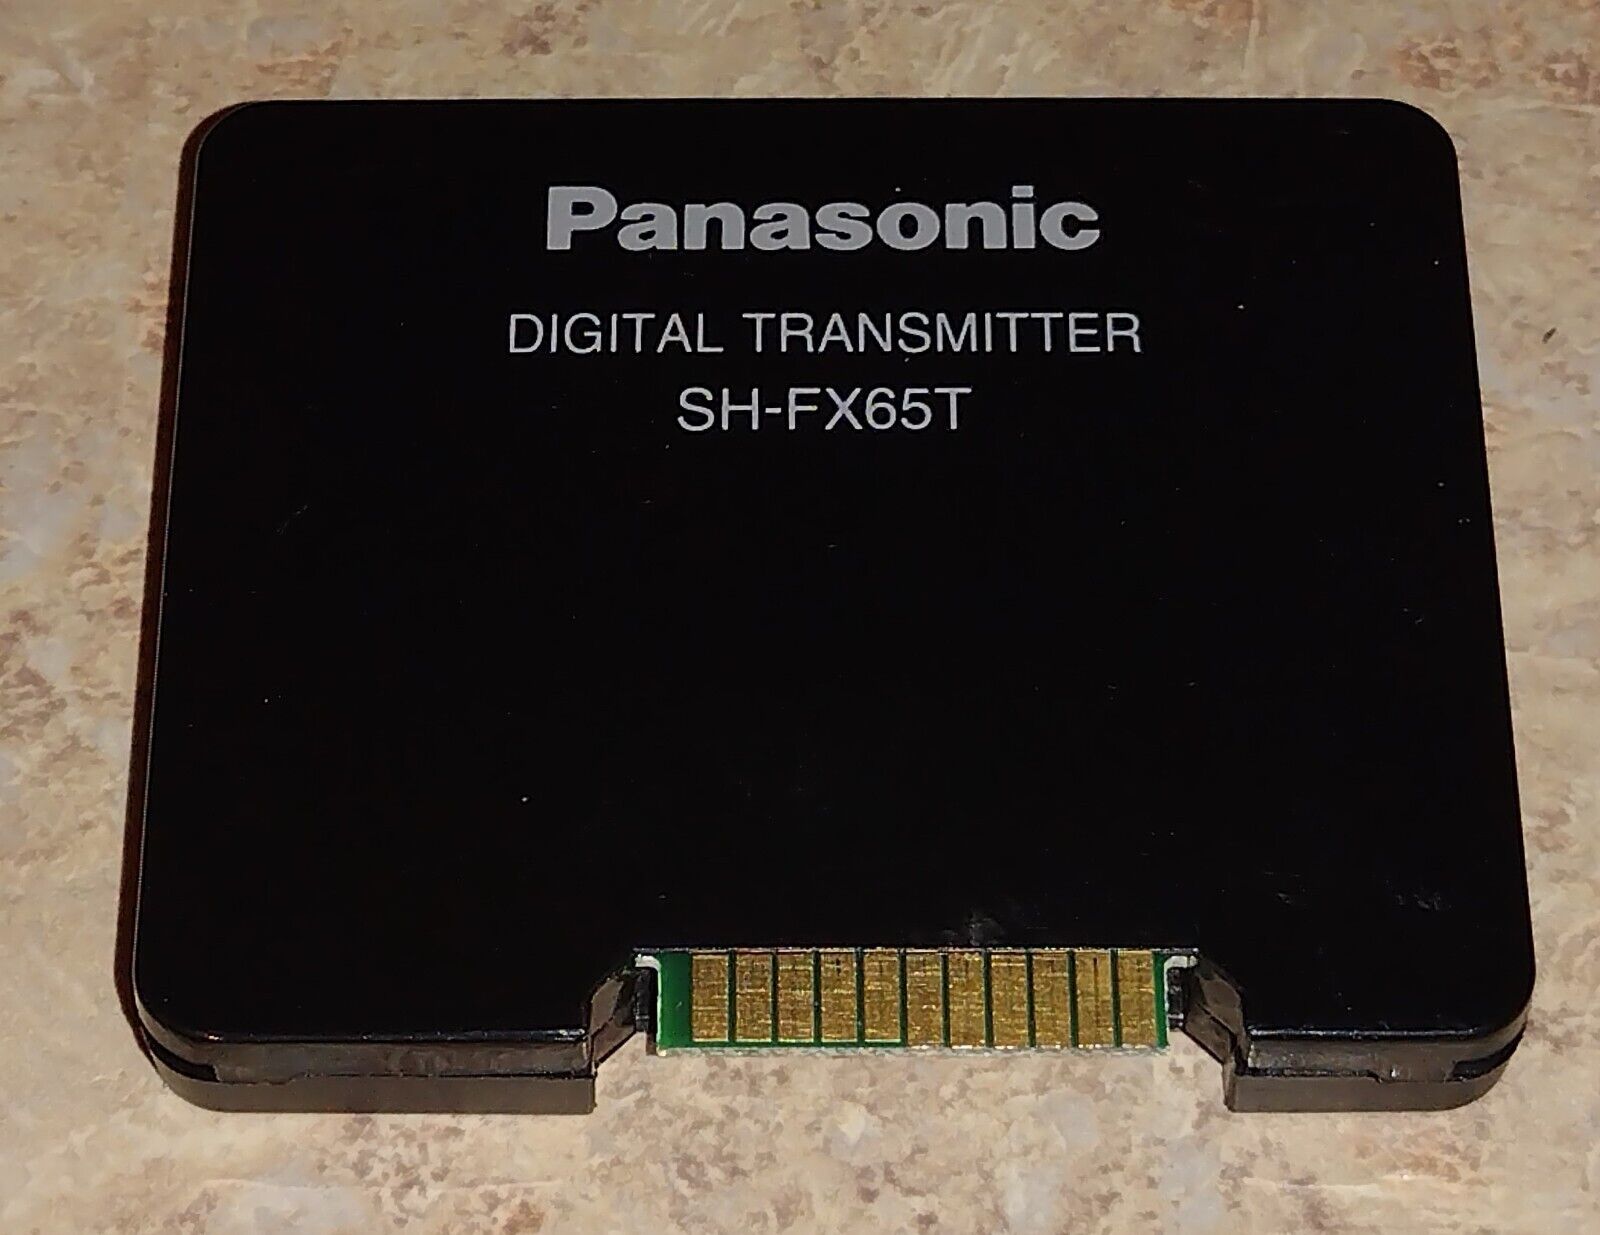 Primary image for Panasonic Wireless Digital Transmitter SH-FX65T